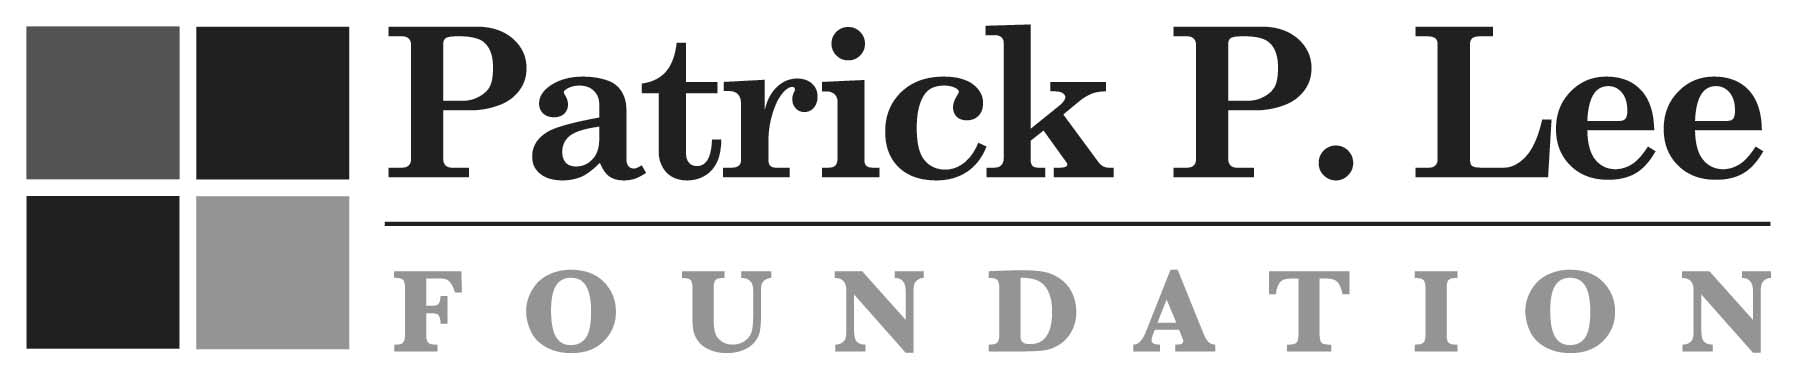 Patrick P. Lee Foundation logo